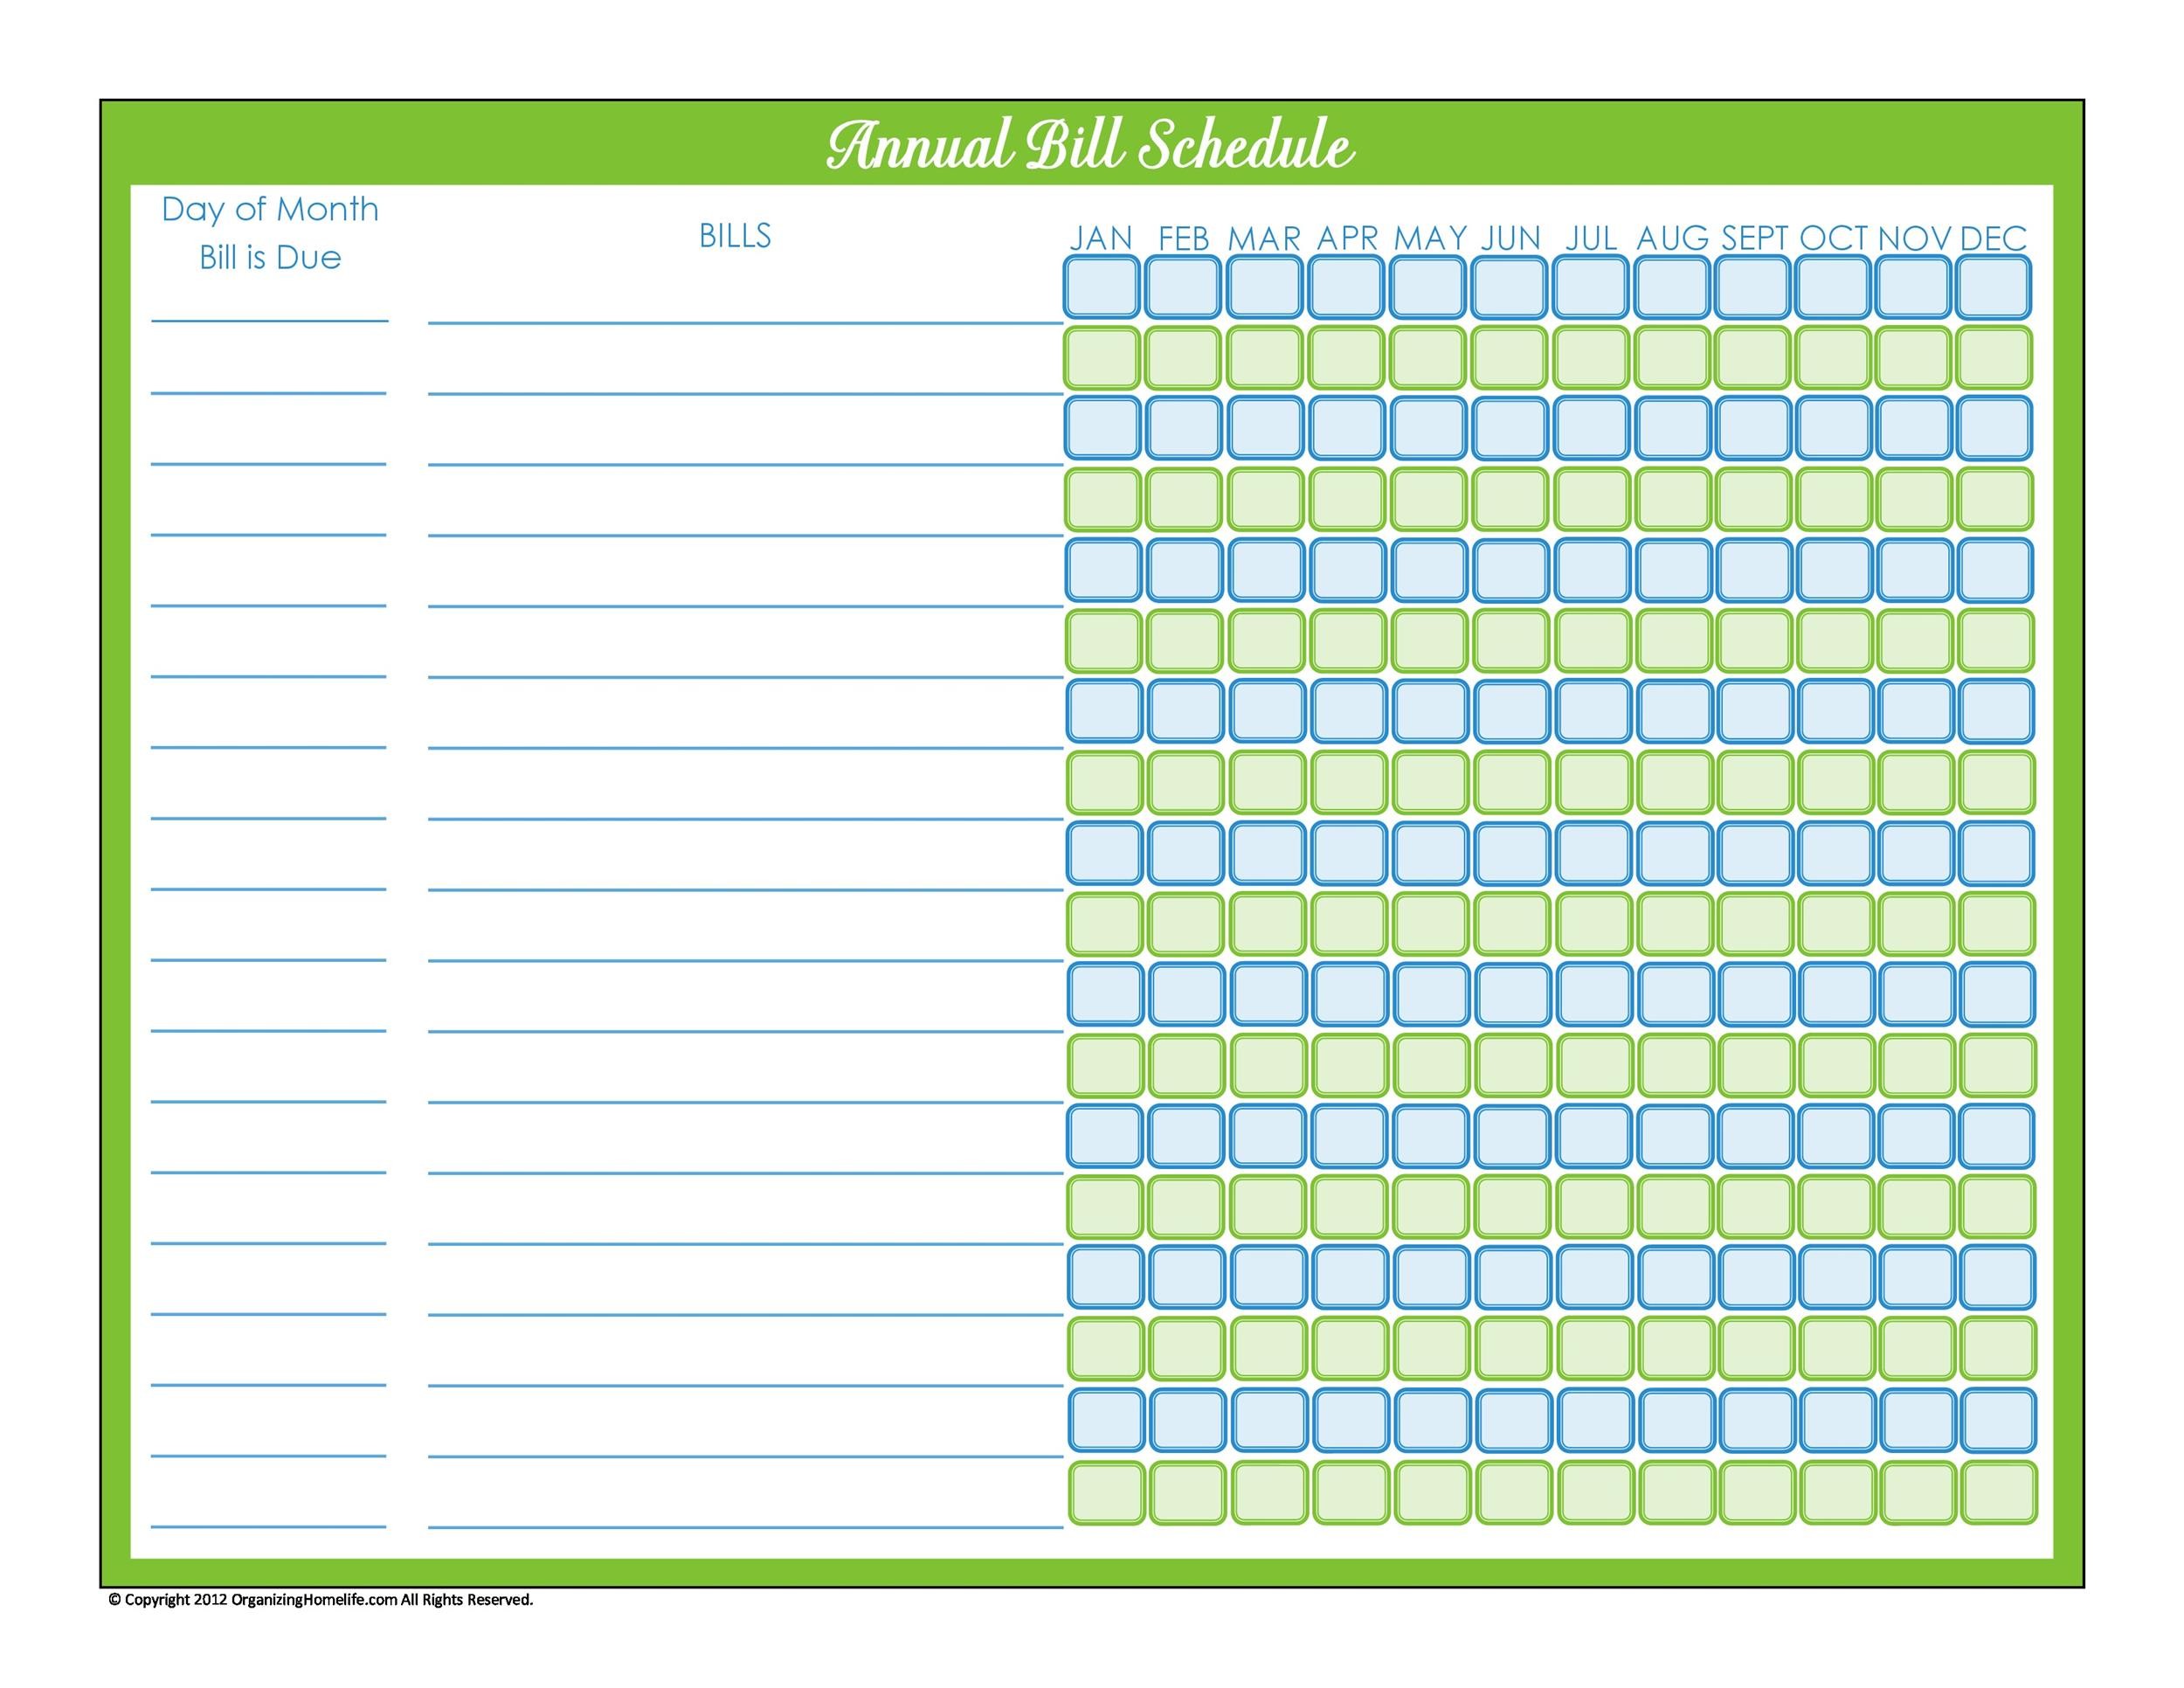 33 Free Bill Pay Checklists & Bill Calendars (PDF, Word & Excel)